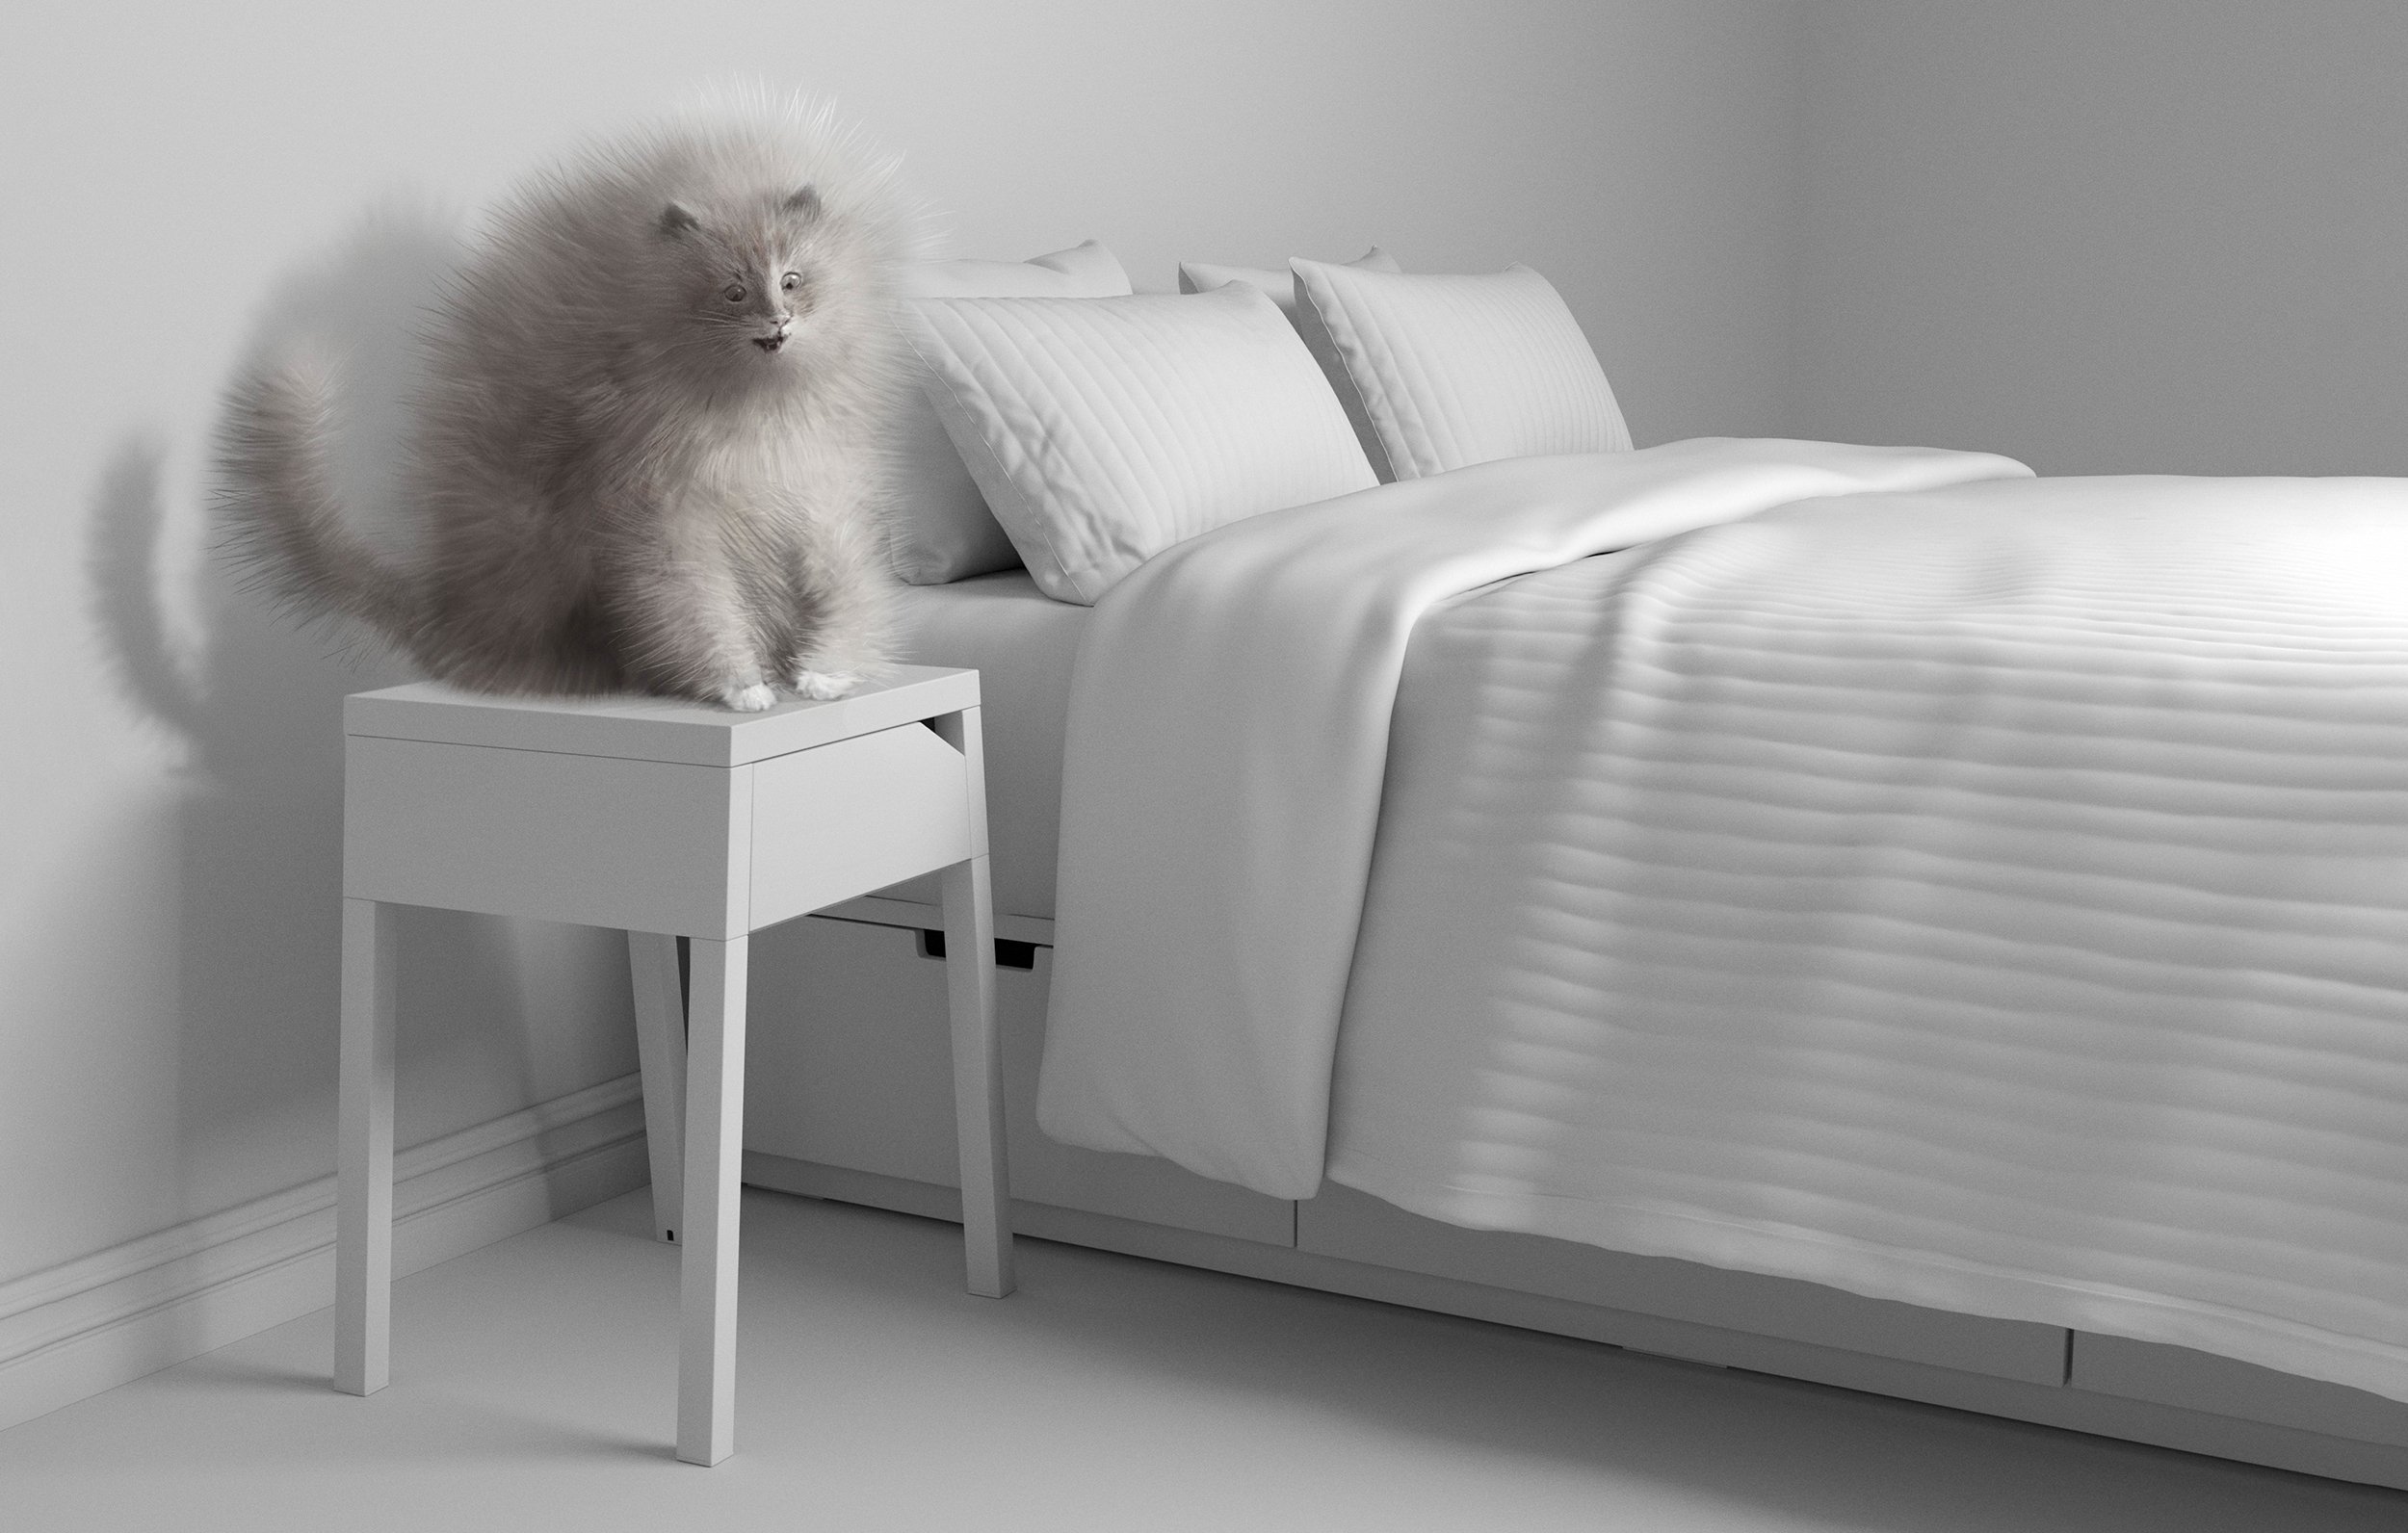 Ikea_Cats_Press_Bedroom_Model_Srgb2500.jpg